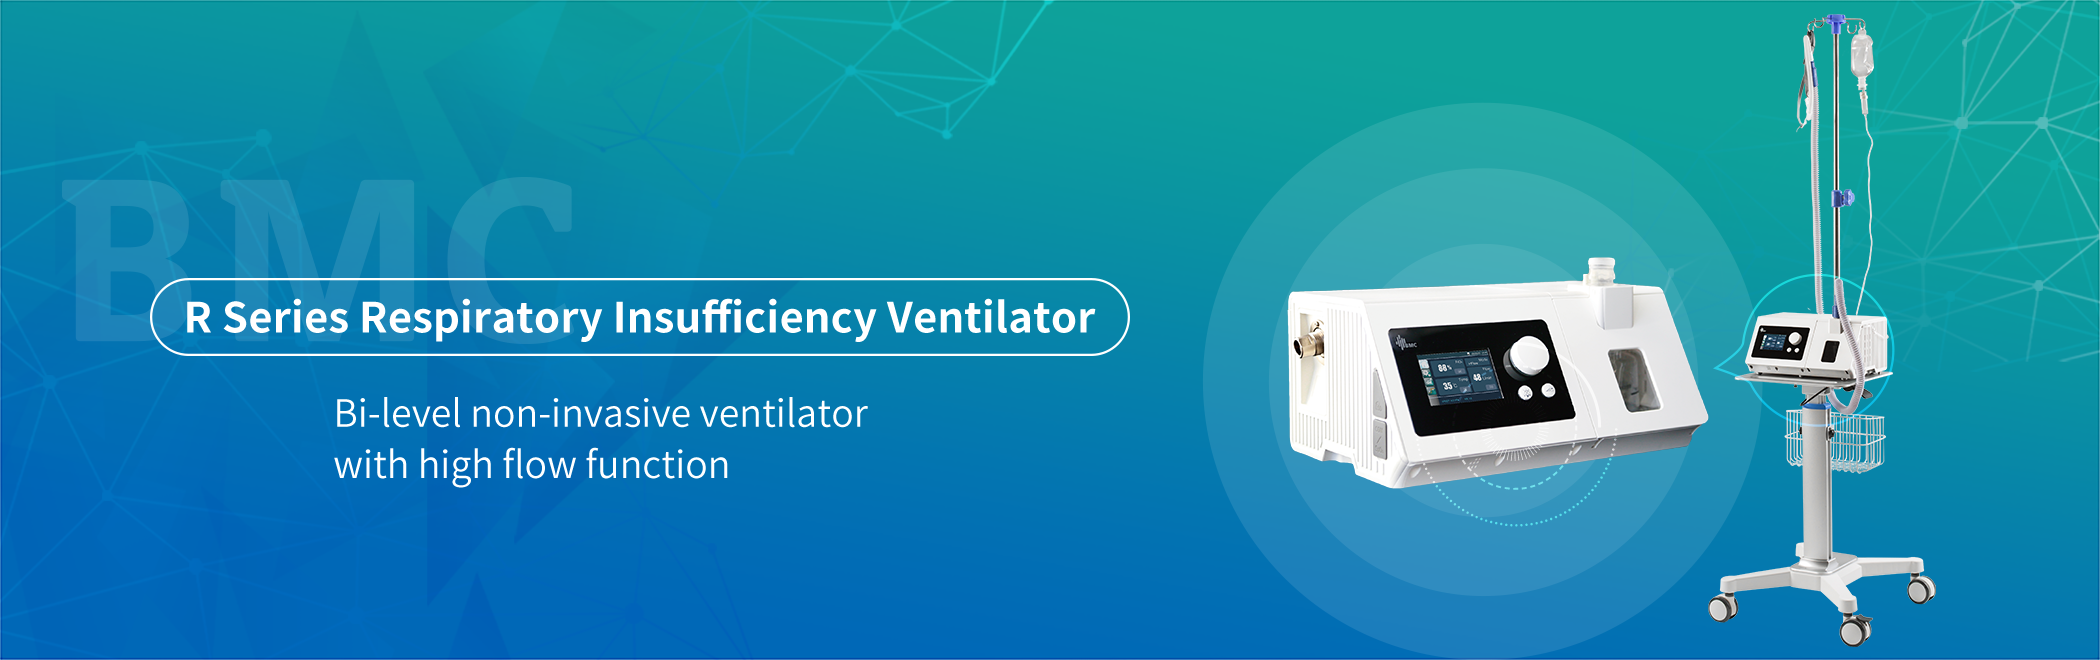 Respiratory Insufficiency Ventilator